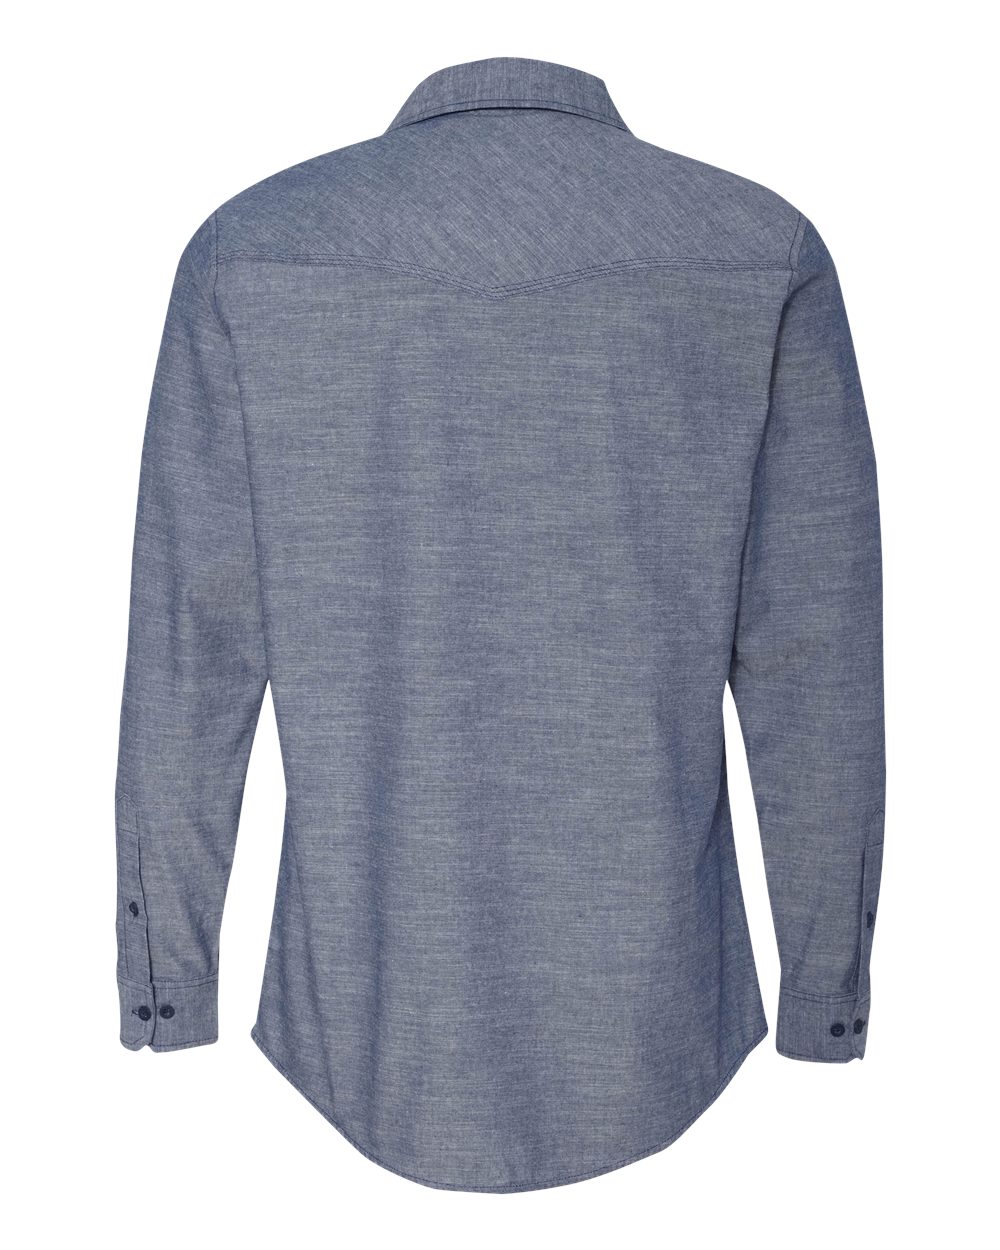 Burnside Chambray Long Sleeve Shirt - image 3 of 5